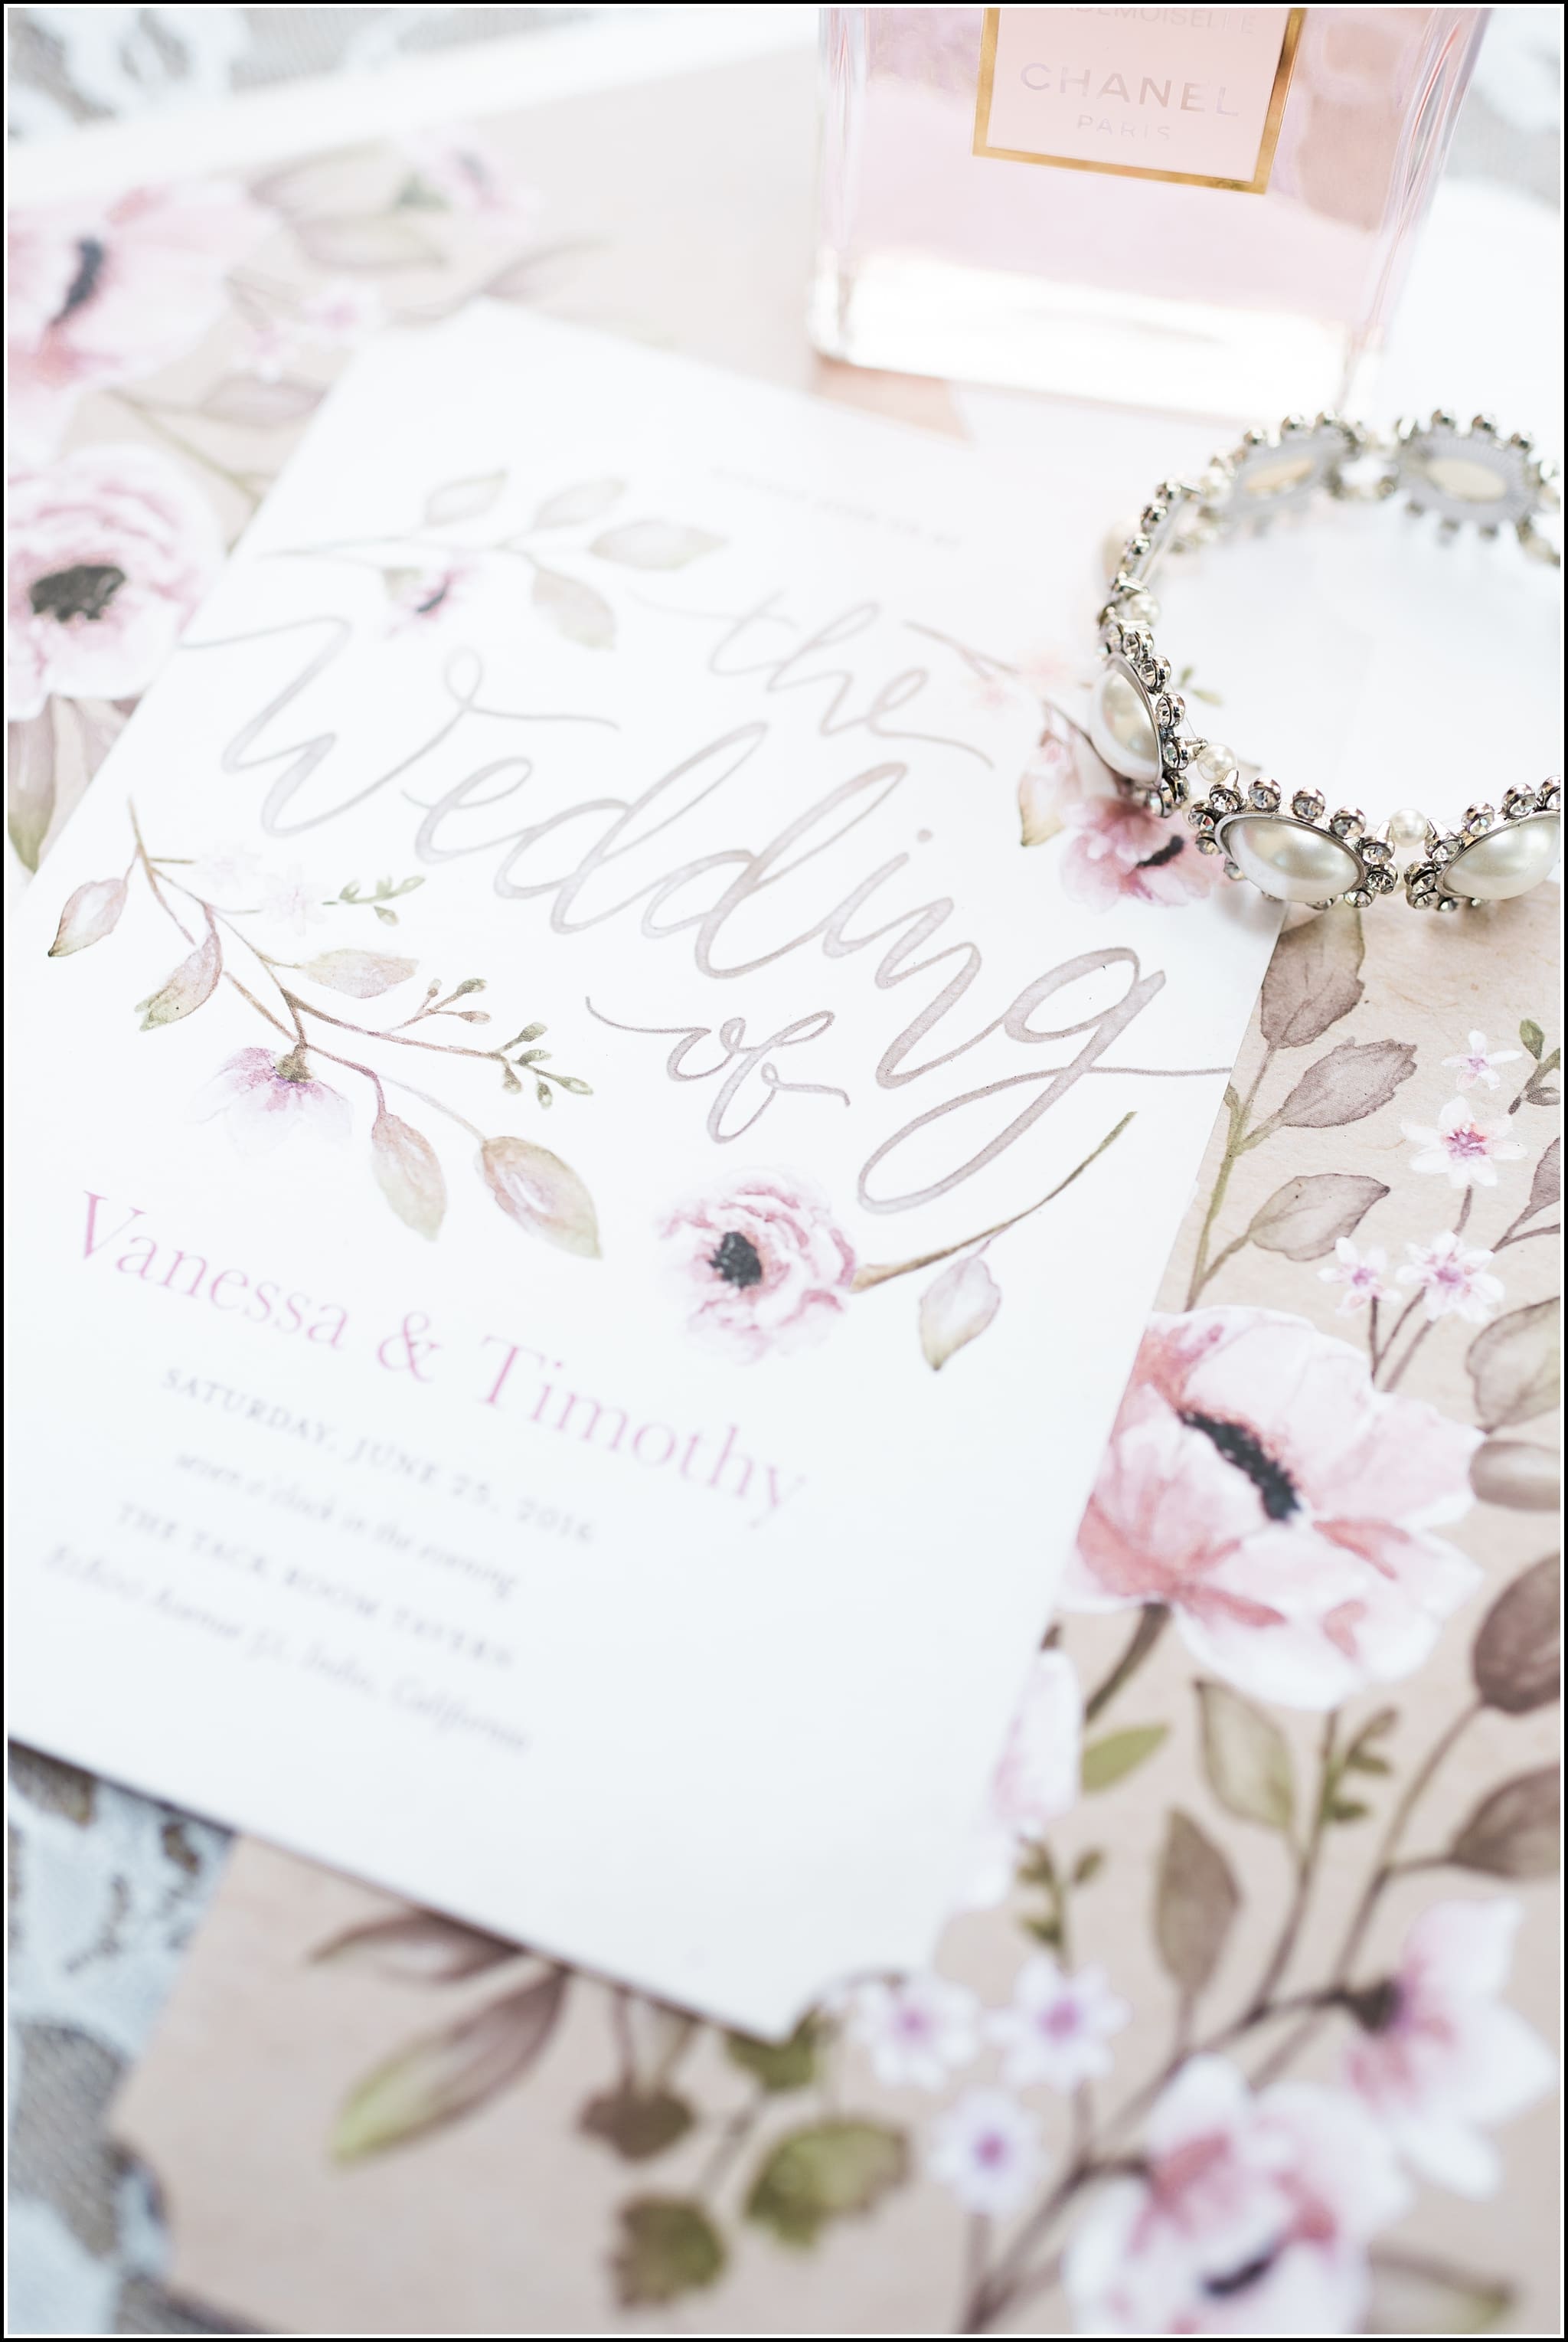 2016 wedding favorites, favorite wedding photos 2016, pretty pink wedding invitations, floral wedding invitations, pink rustic wedding invitations